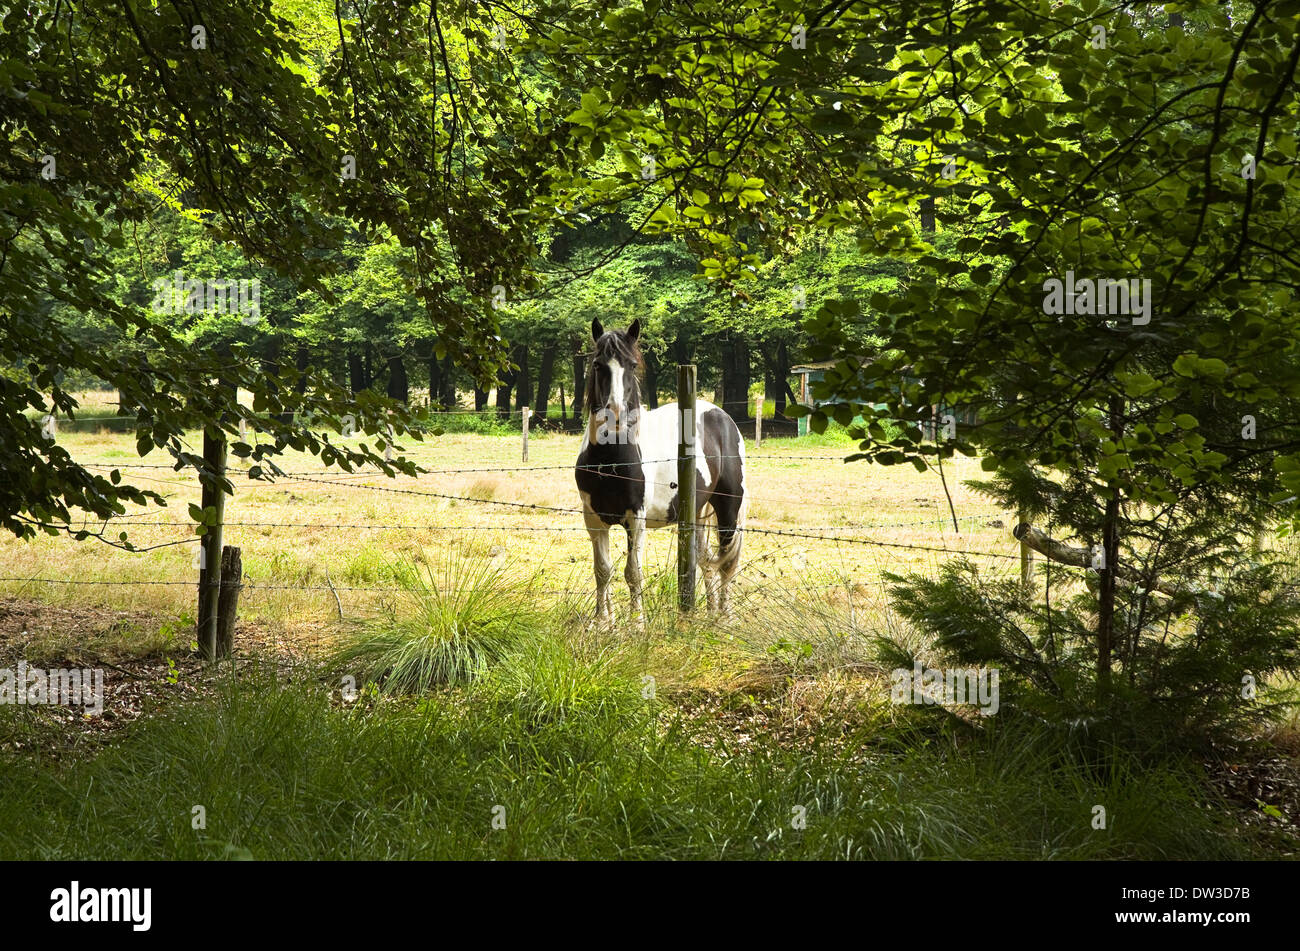 Pferd stehend hinter Stacheldraht Zaun im Wald im Sommer - horizontal Stockfoto